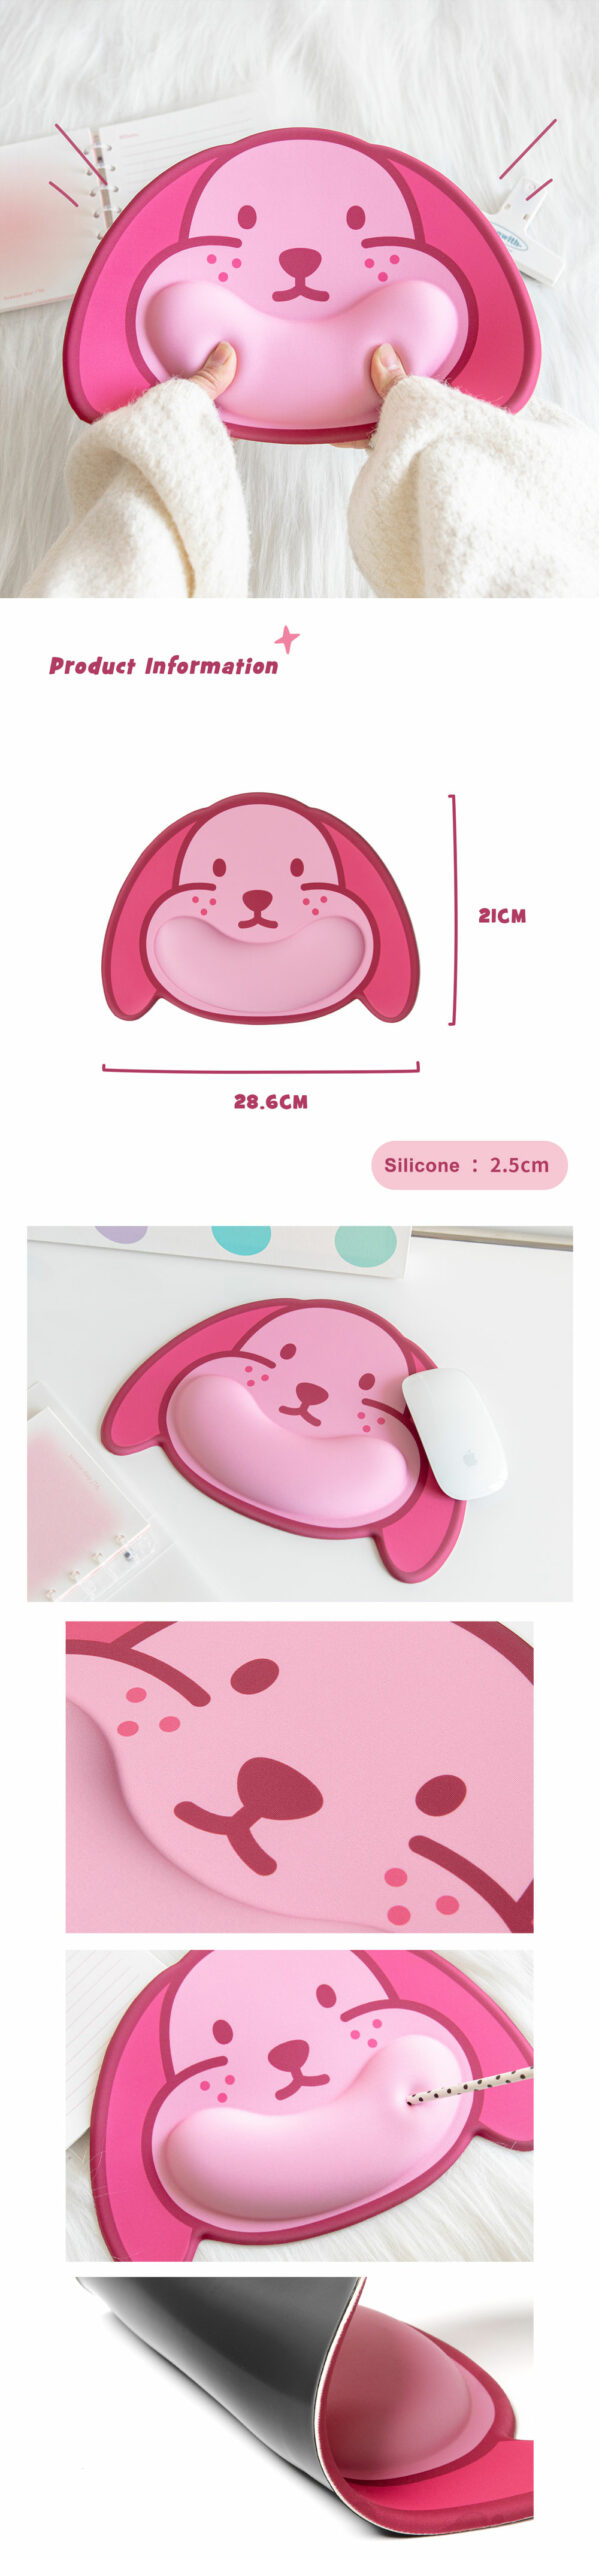 Cute 3D Mouse Pad Product Details 3